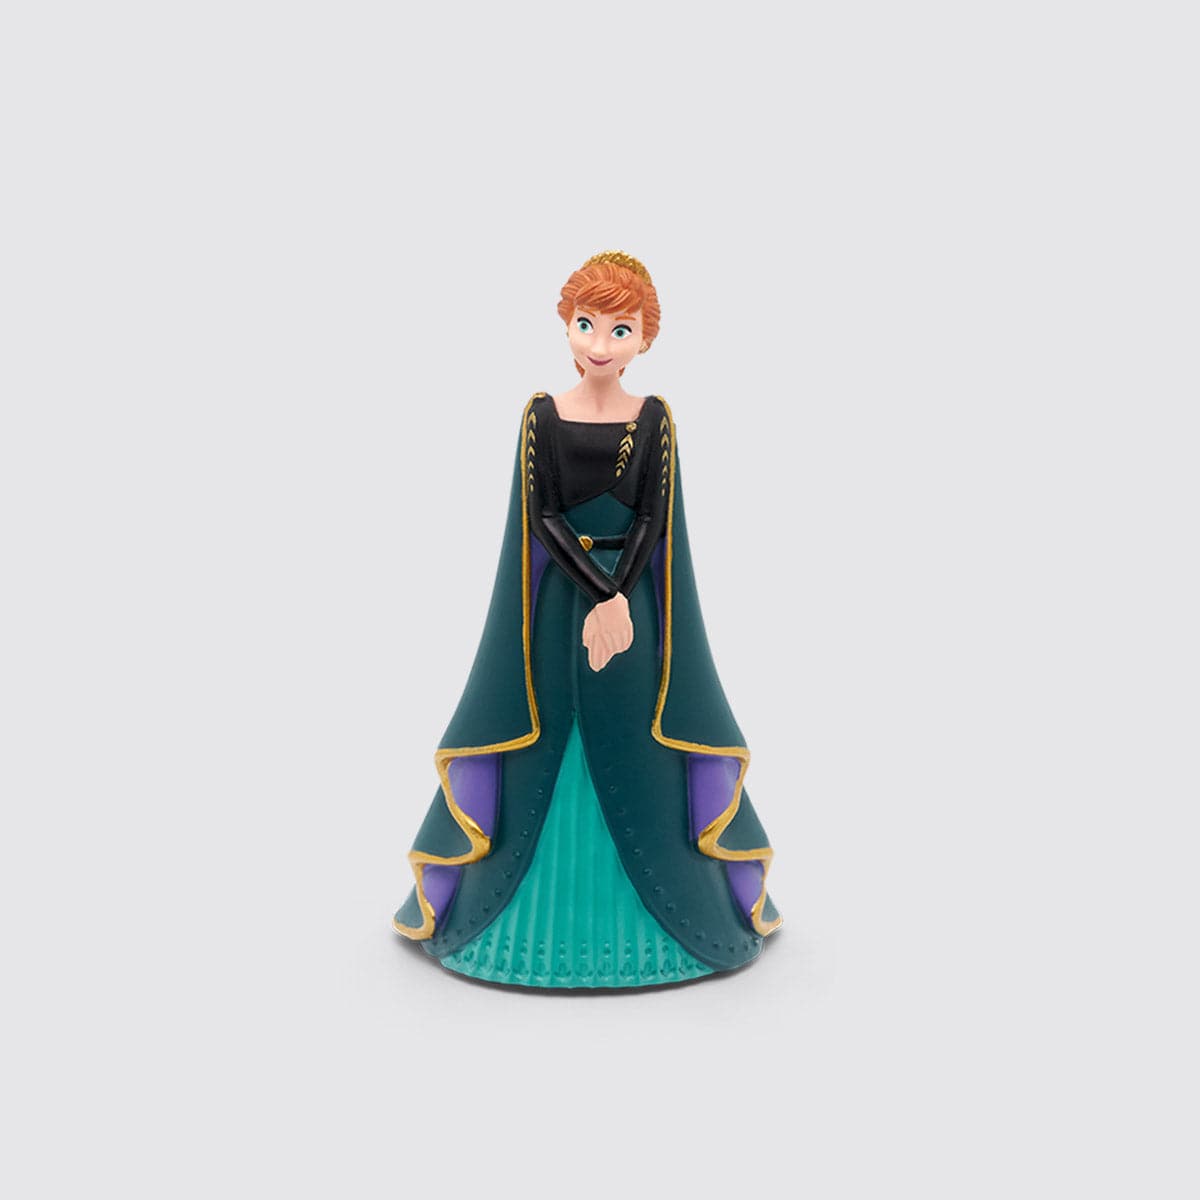 Anna From Frozen 2: Audio Figurine for Kids